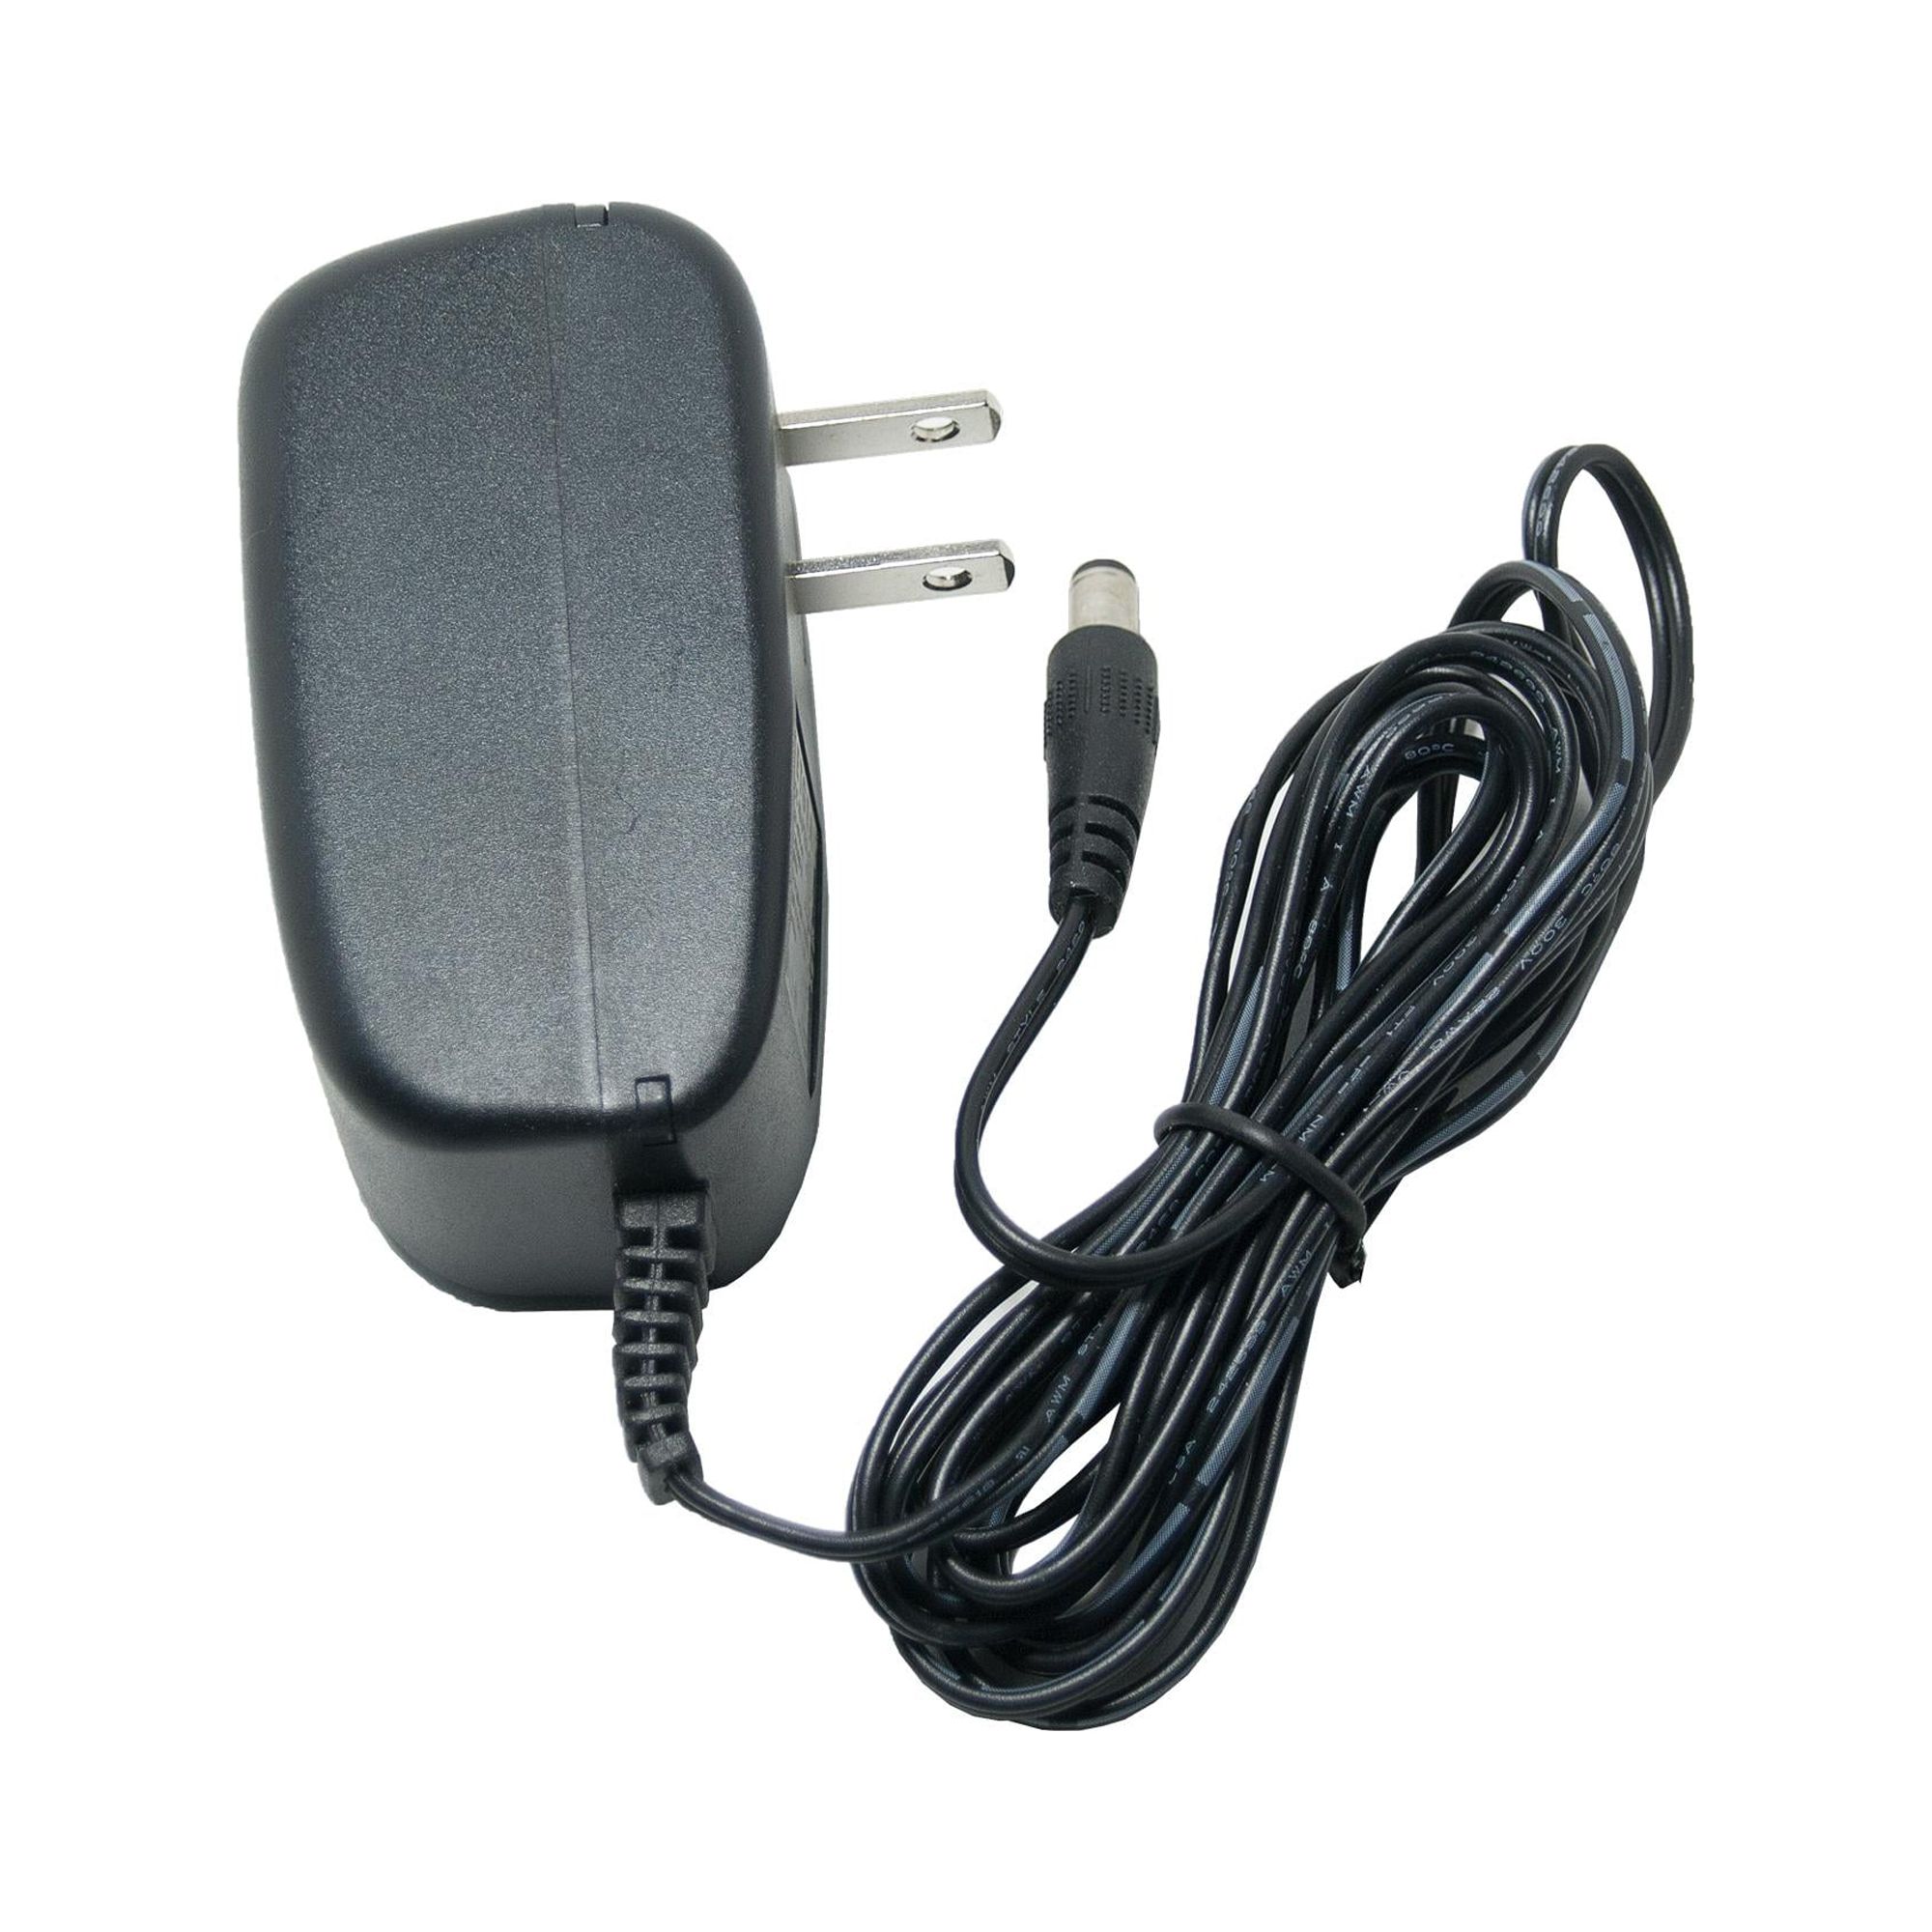 Netgear Adapter for N300 ADSL Router DGN2200 DGN2200v2 DGN3500, N300 Modem C3000 - image 1 of 3